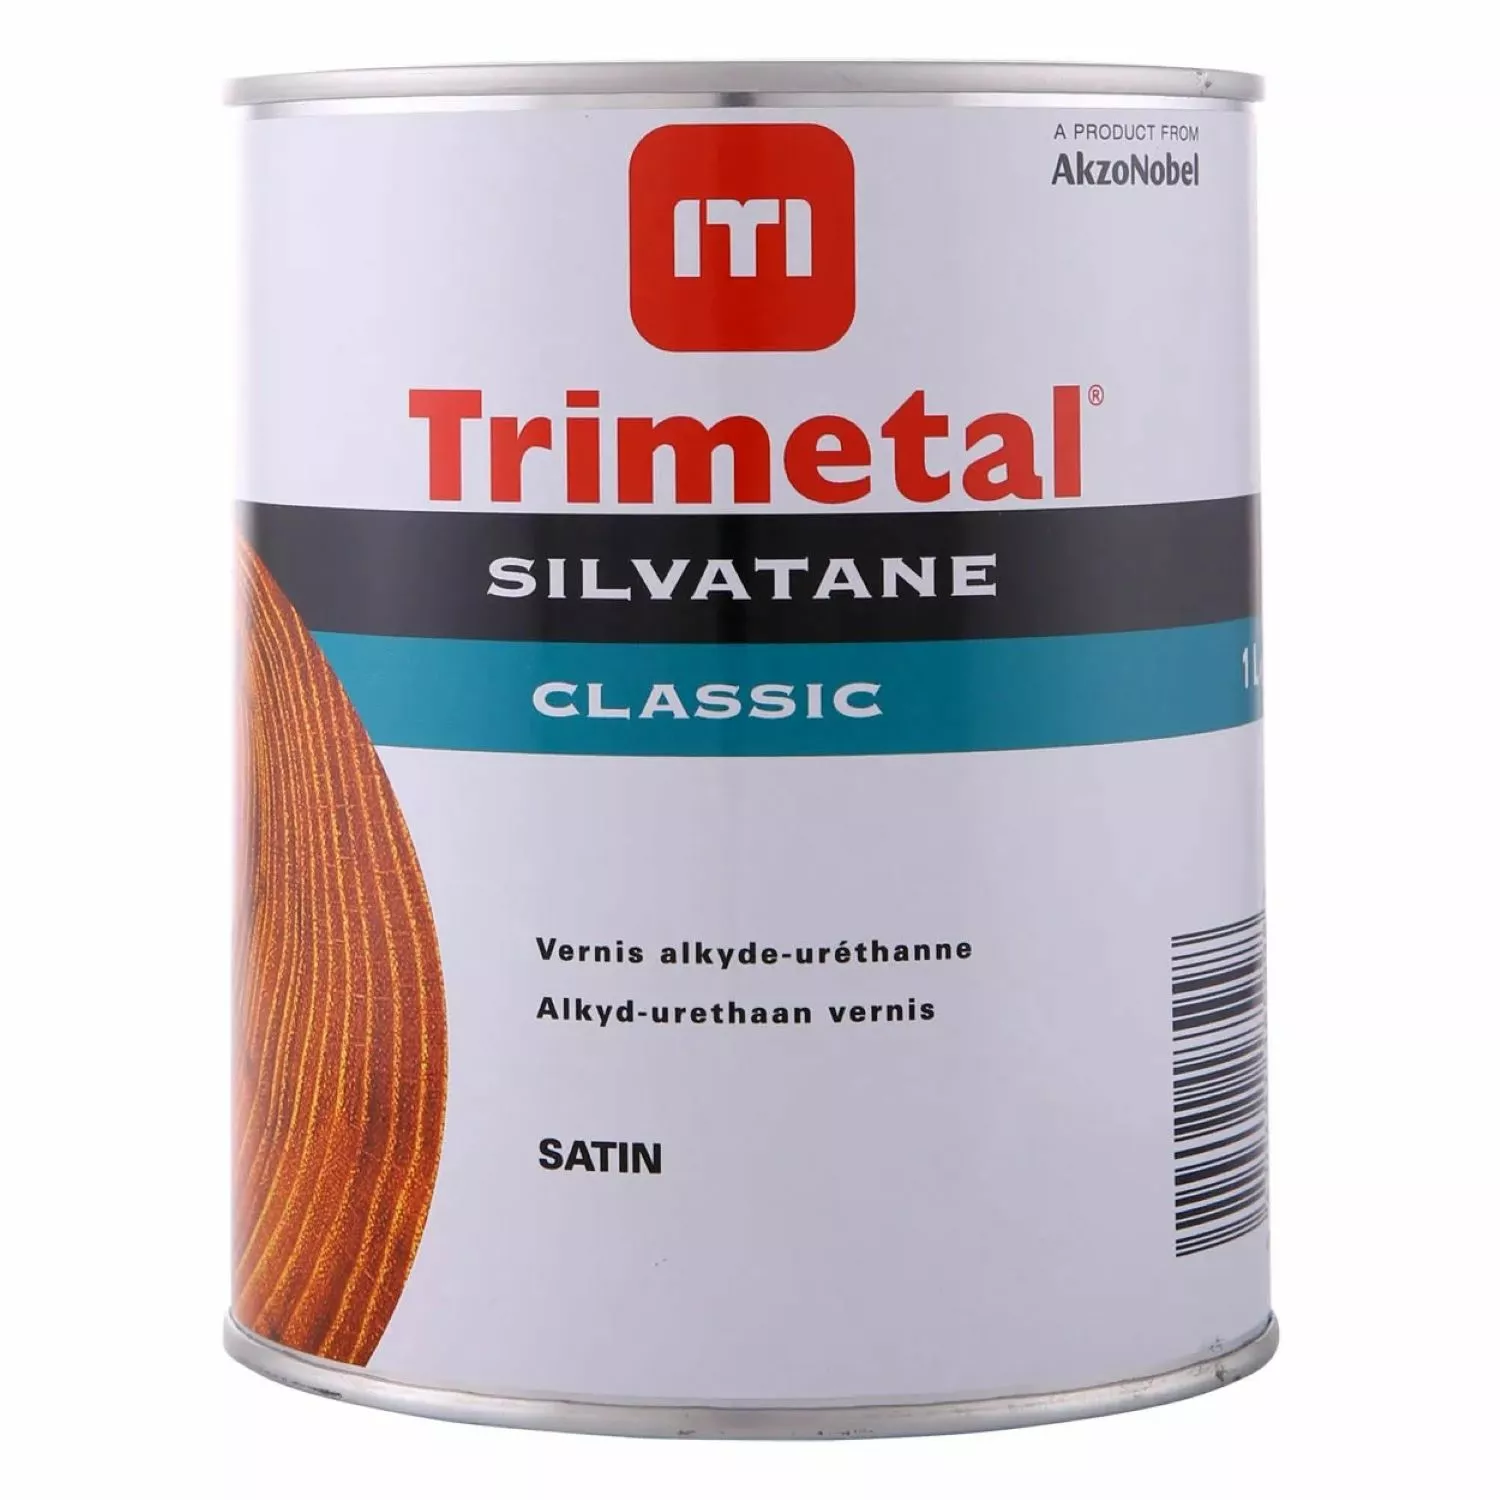 Trimetal Silvatane Classic Satin 500 Ml-image